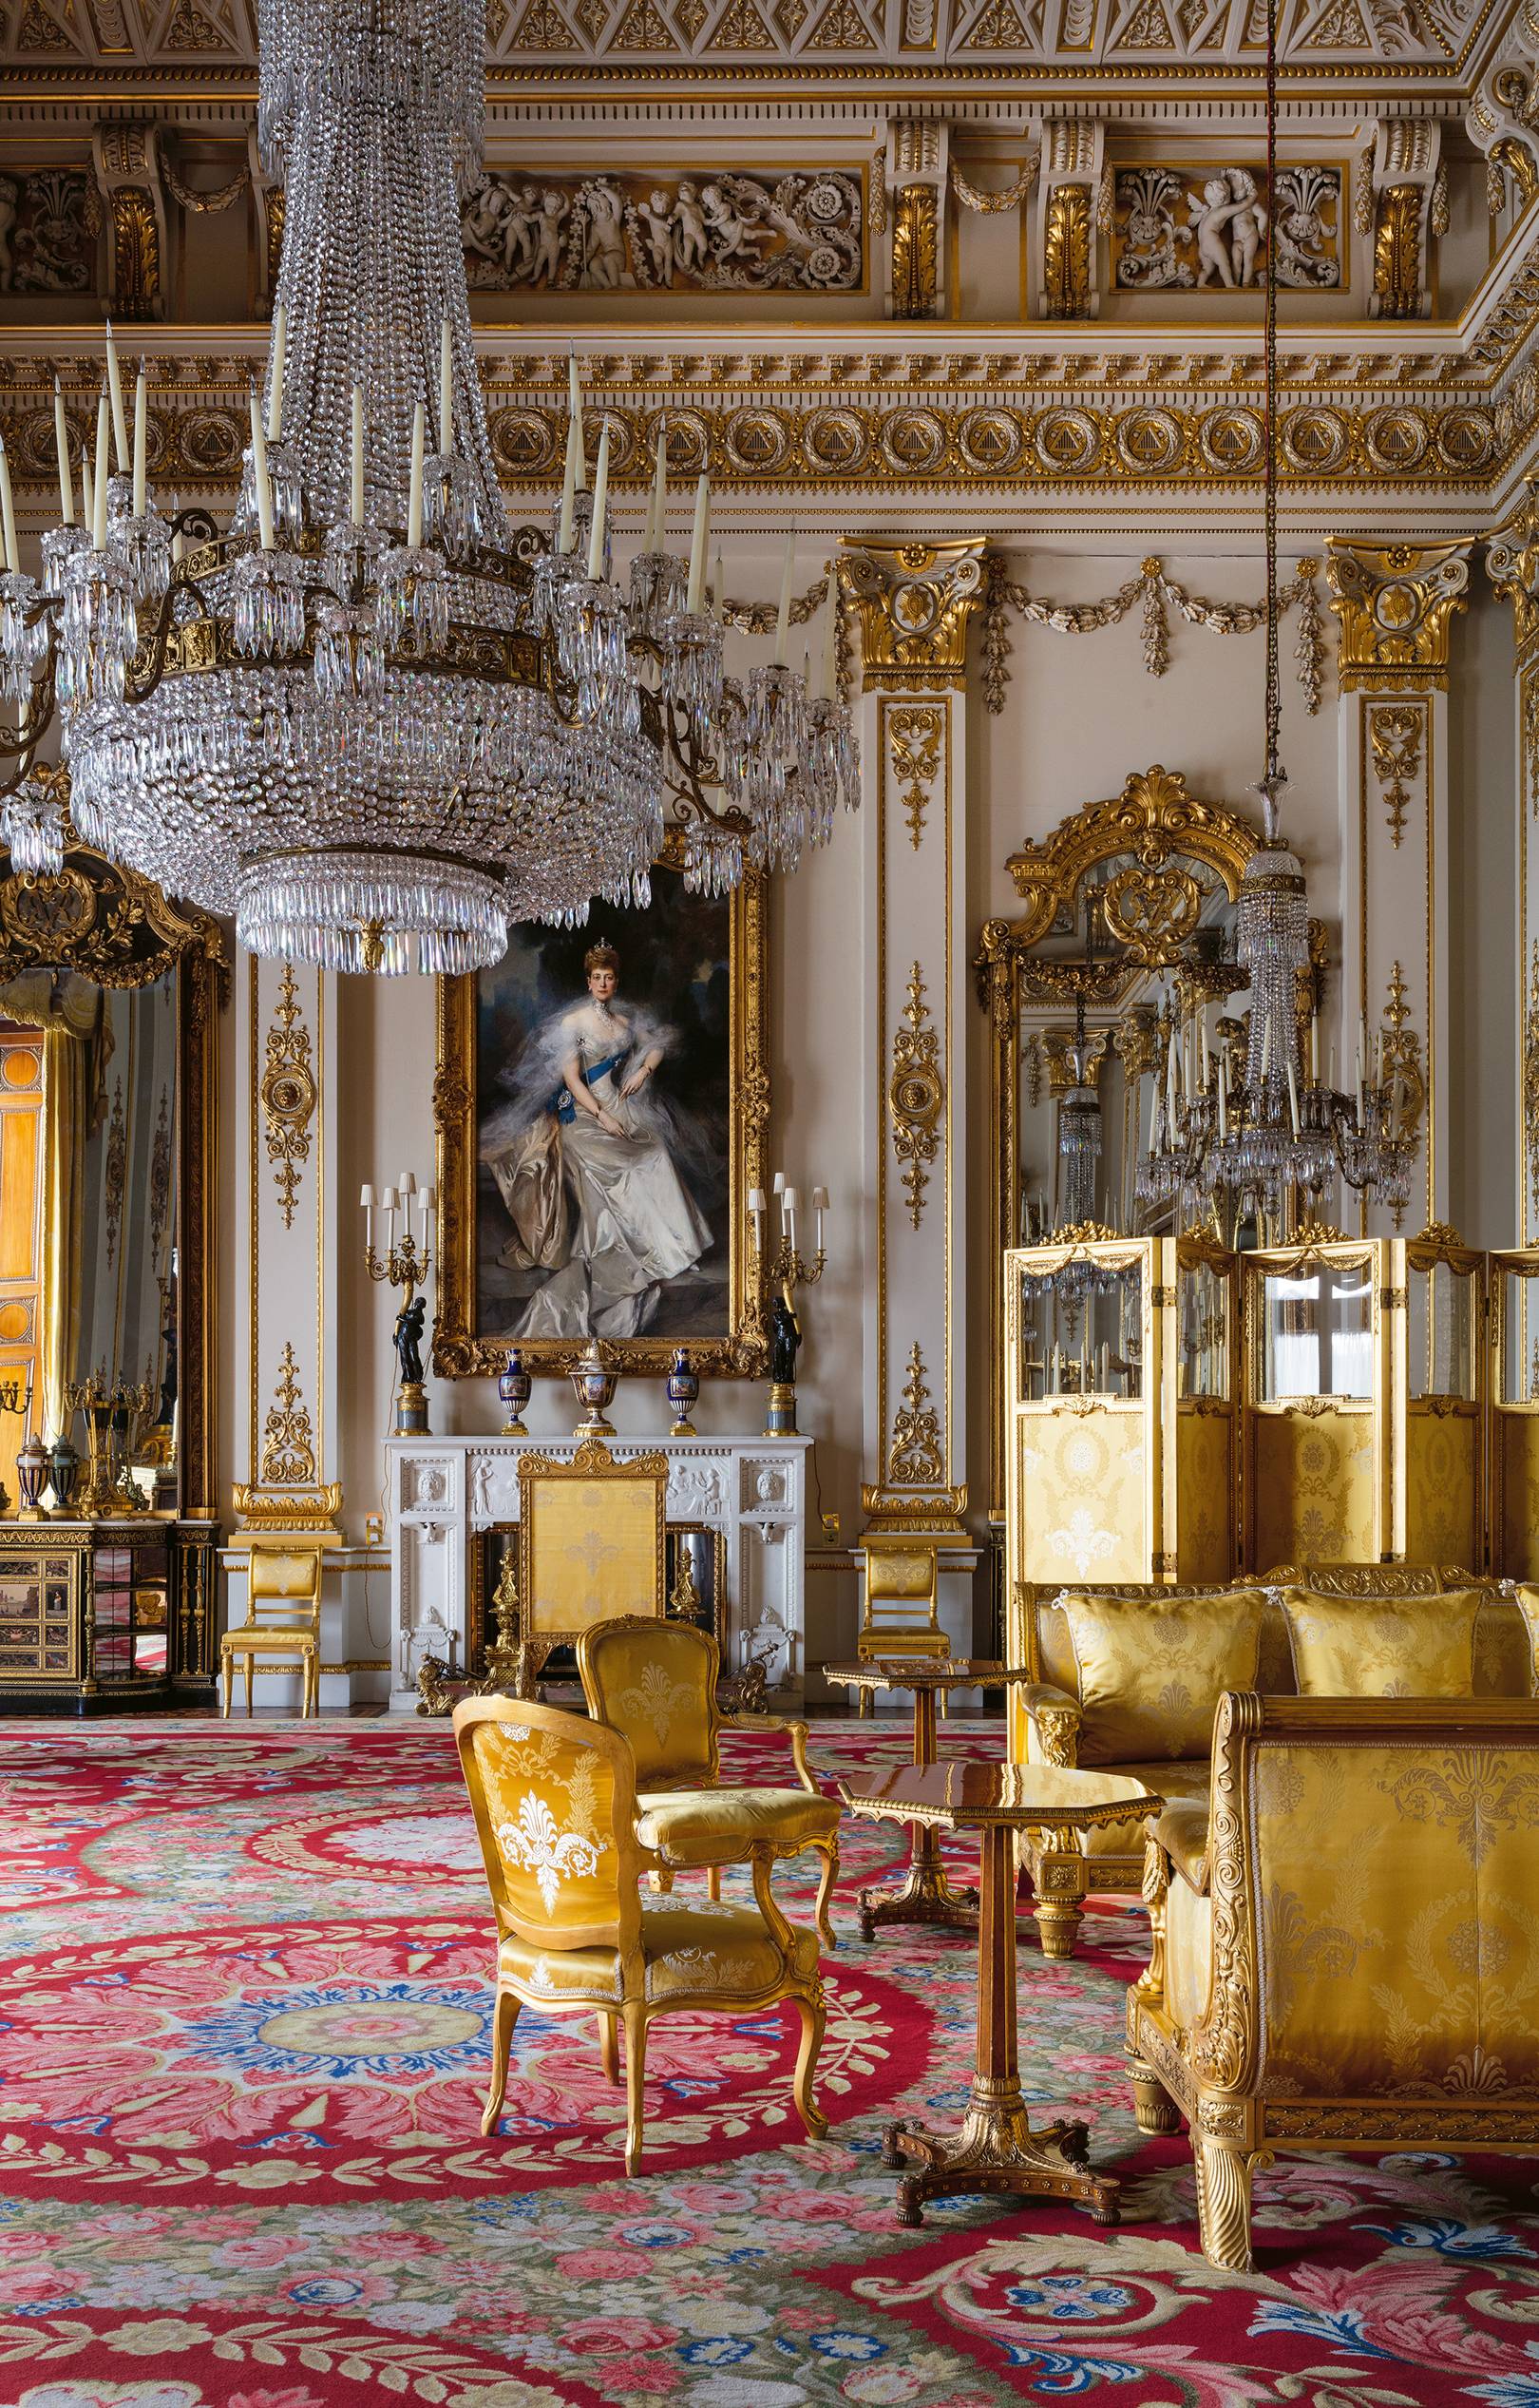 The interiors of Buckingham Palace House & Garden